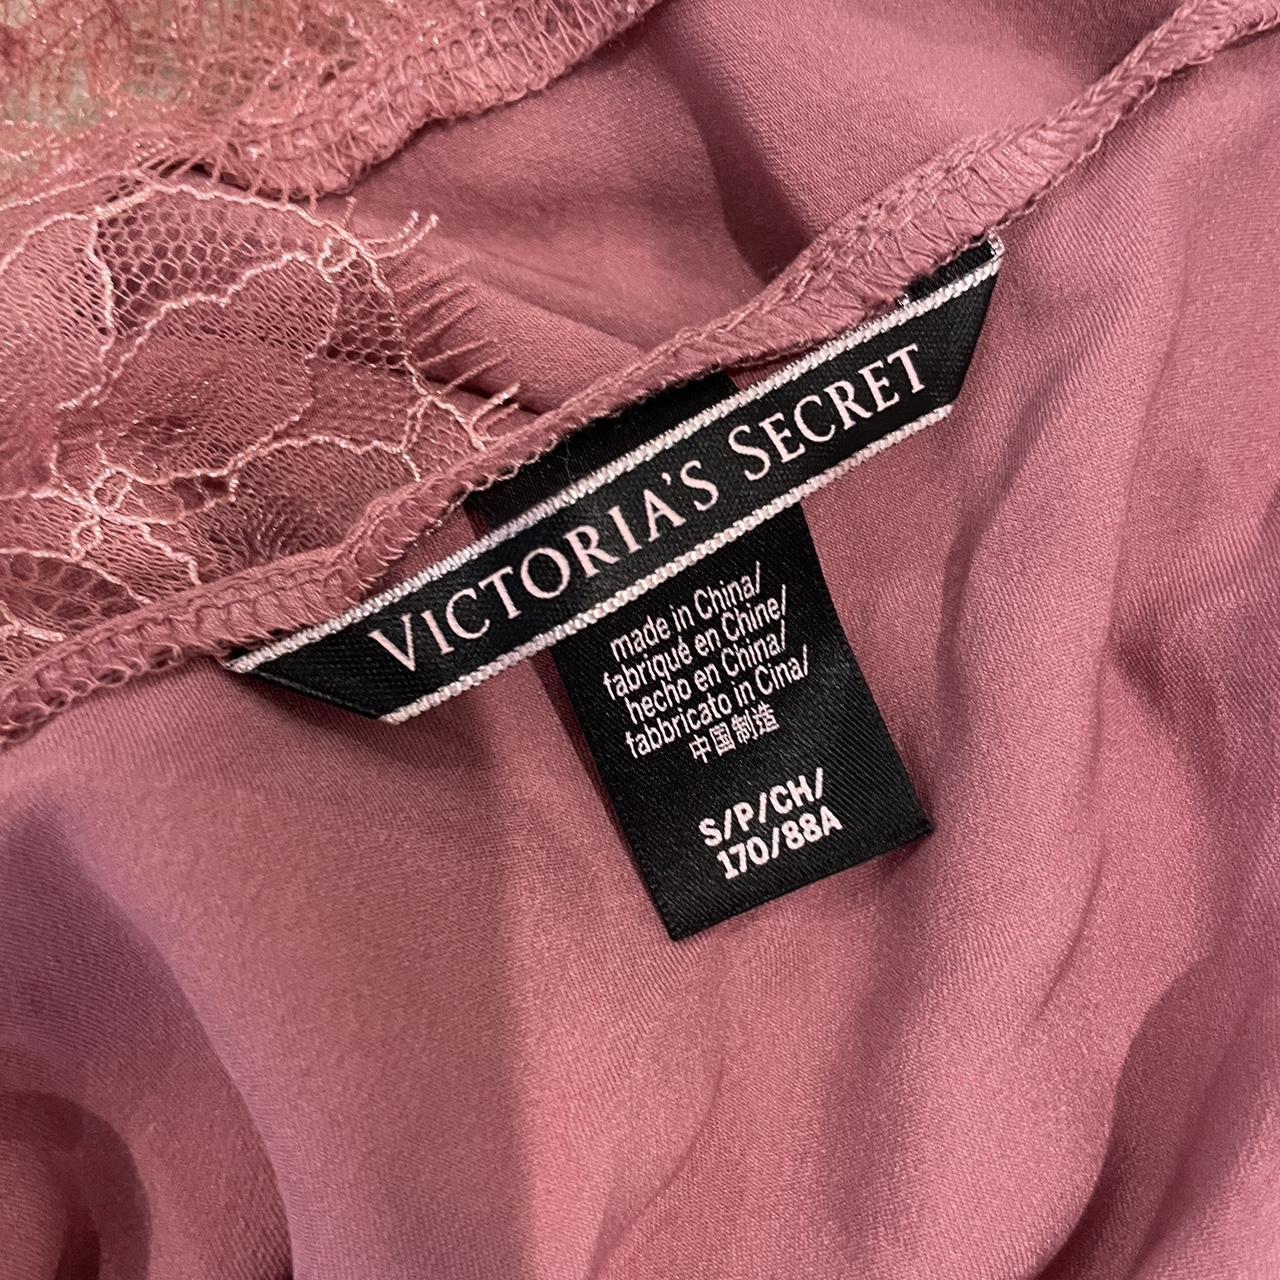 Victoria Secrets pyjama silk set. Never worn was... - Depop